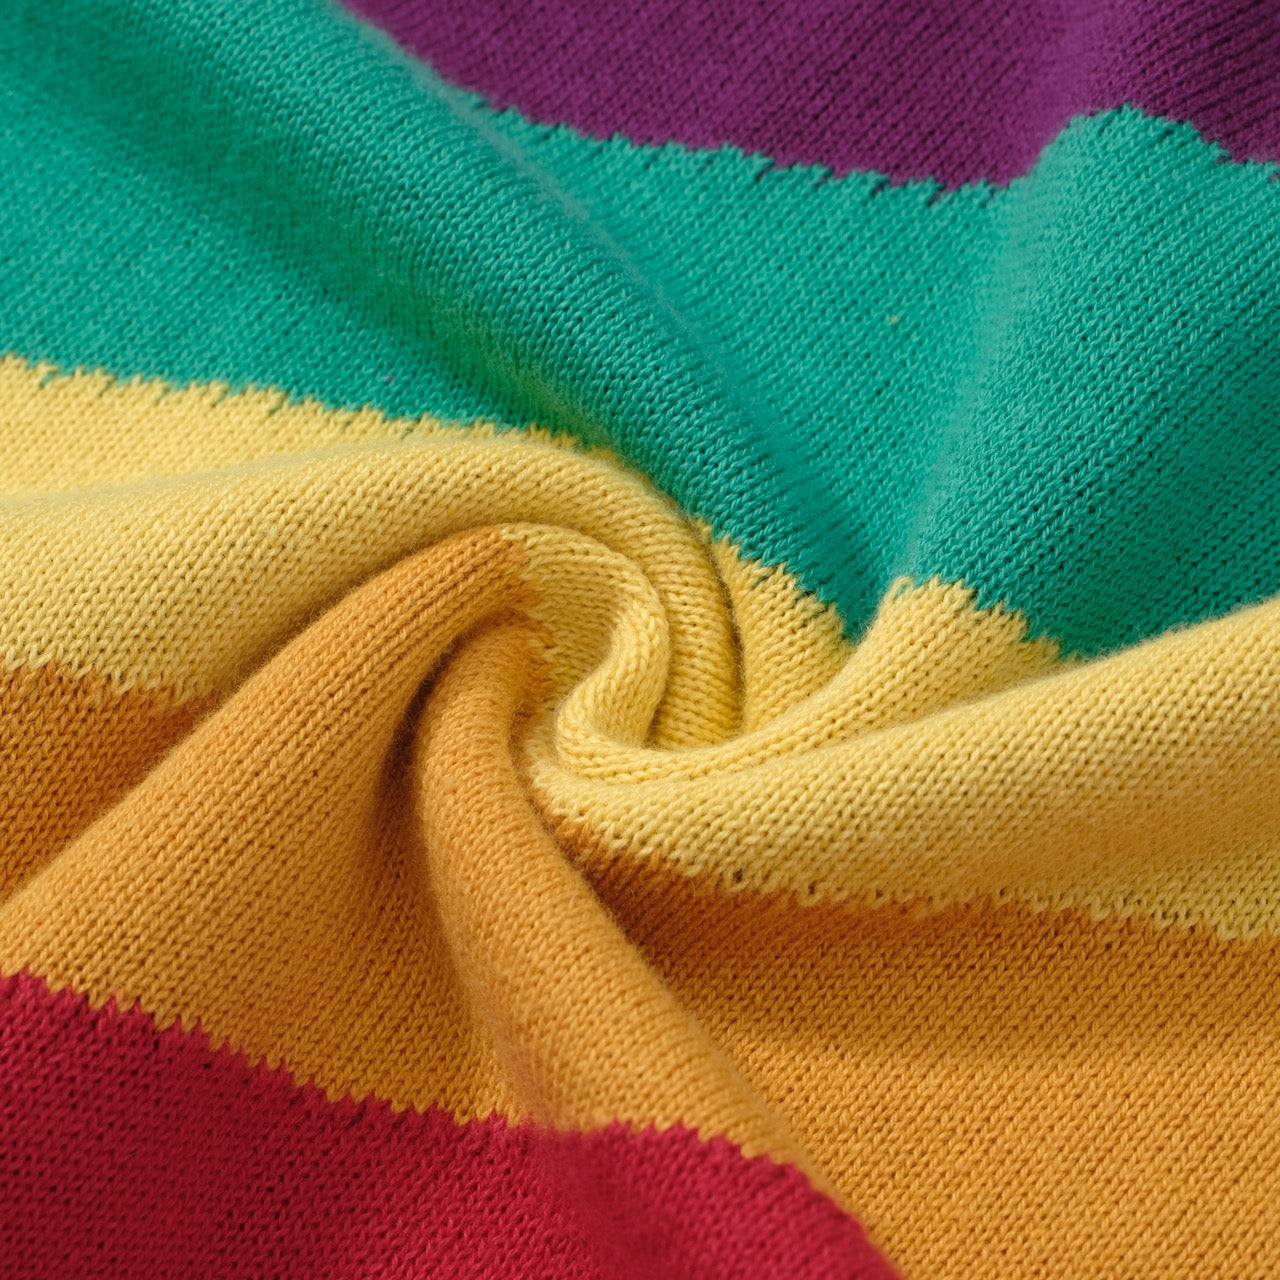 OXKNIT Women Vintage Clothing 1960s Mod Style Casual Knitwear Long Sleeve Rainbow Diagonal Stripe Retro T-shirts